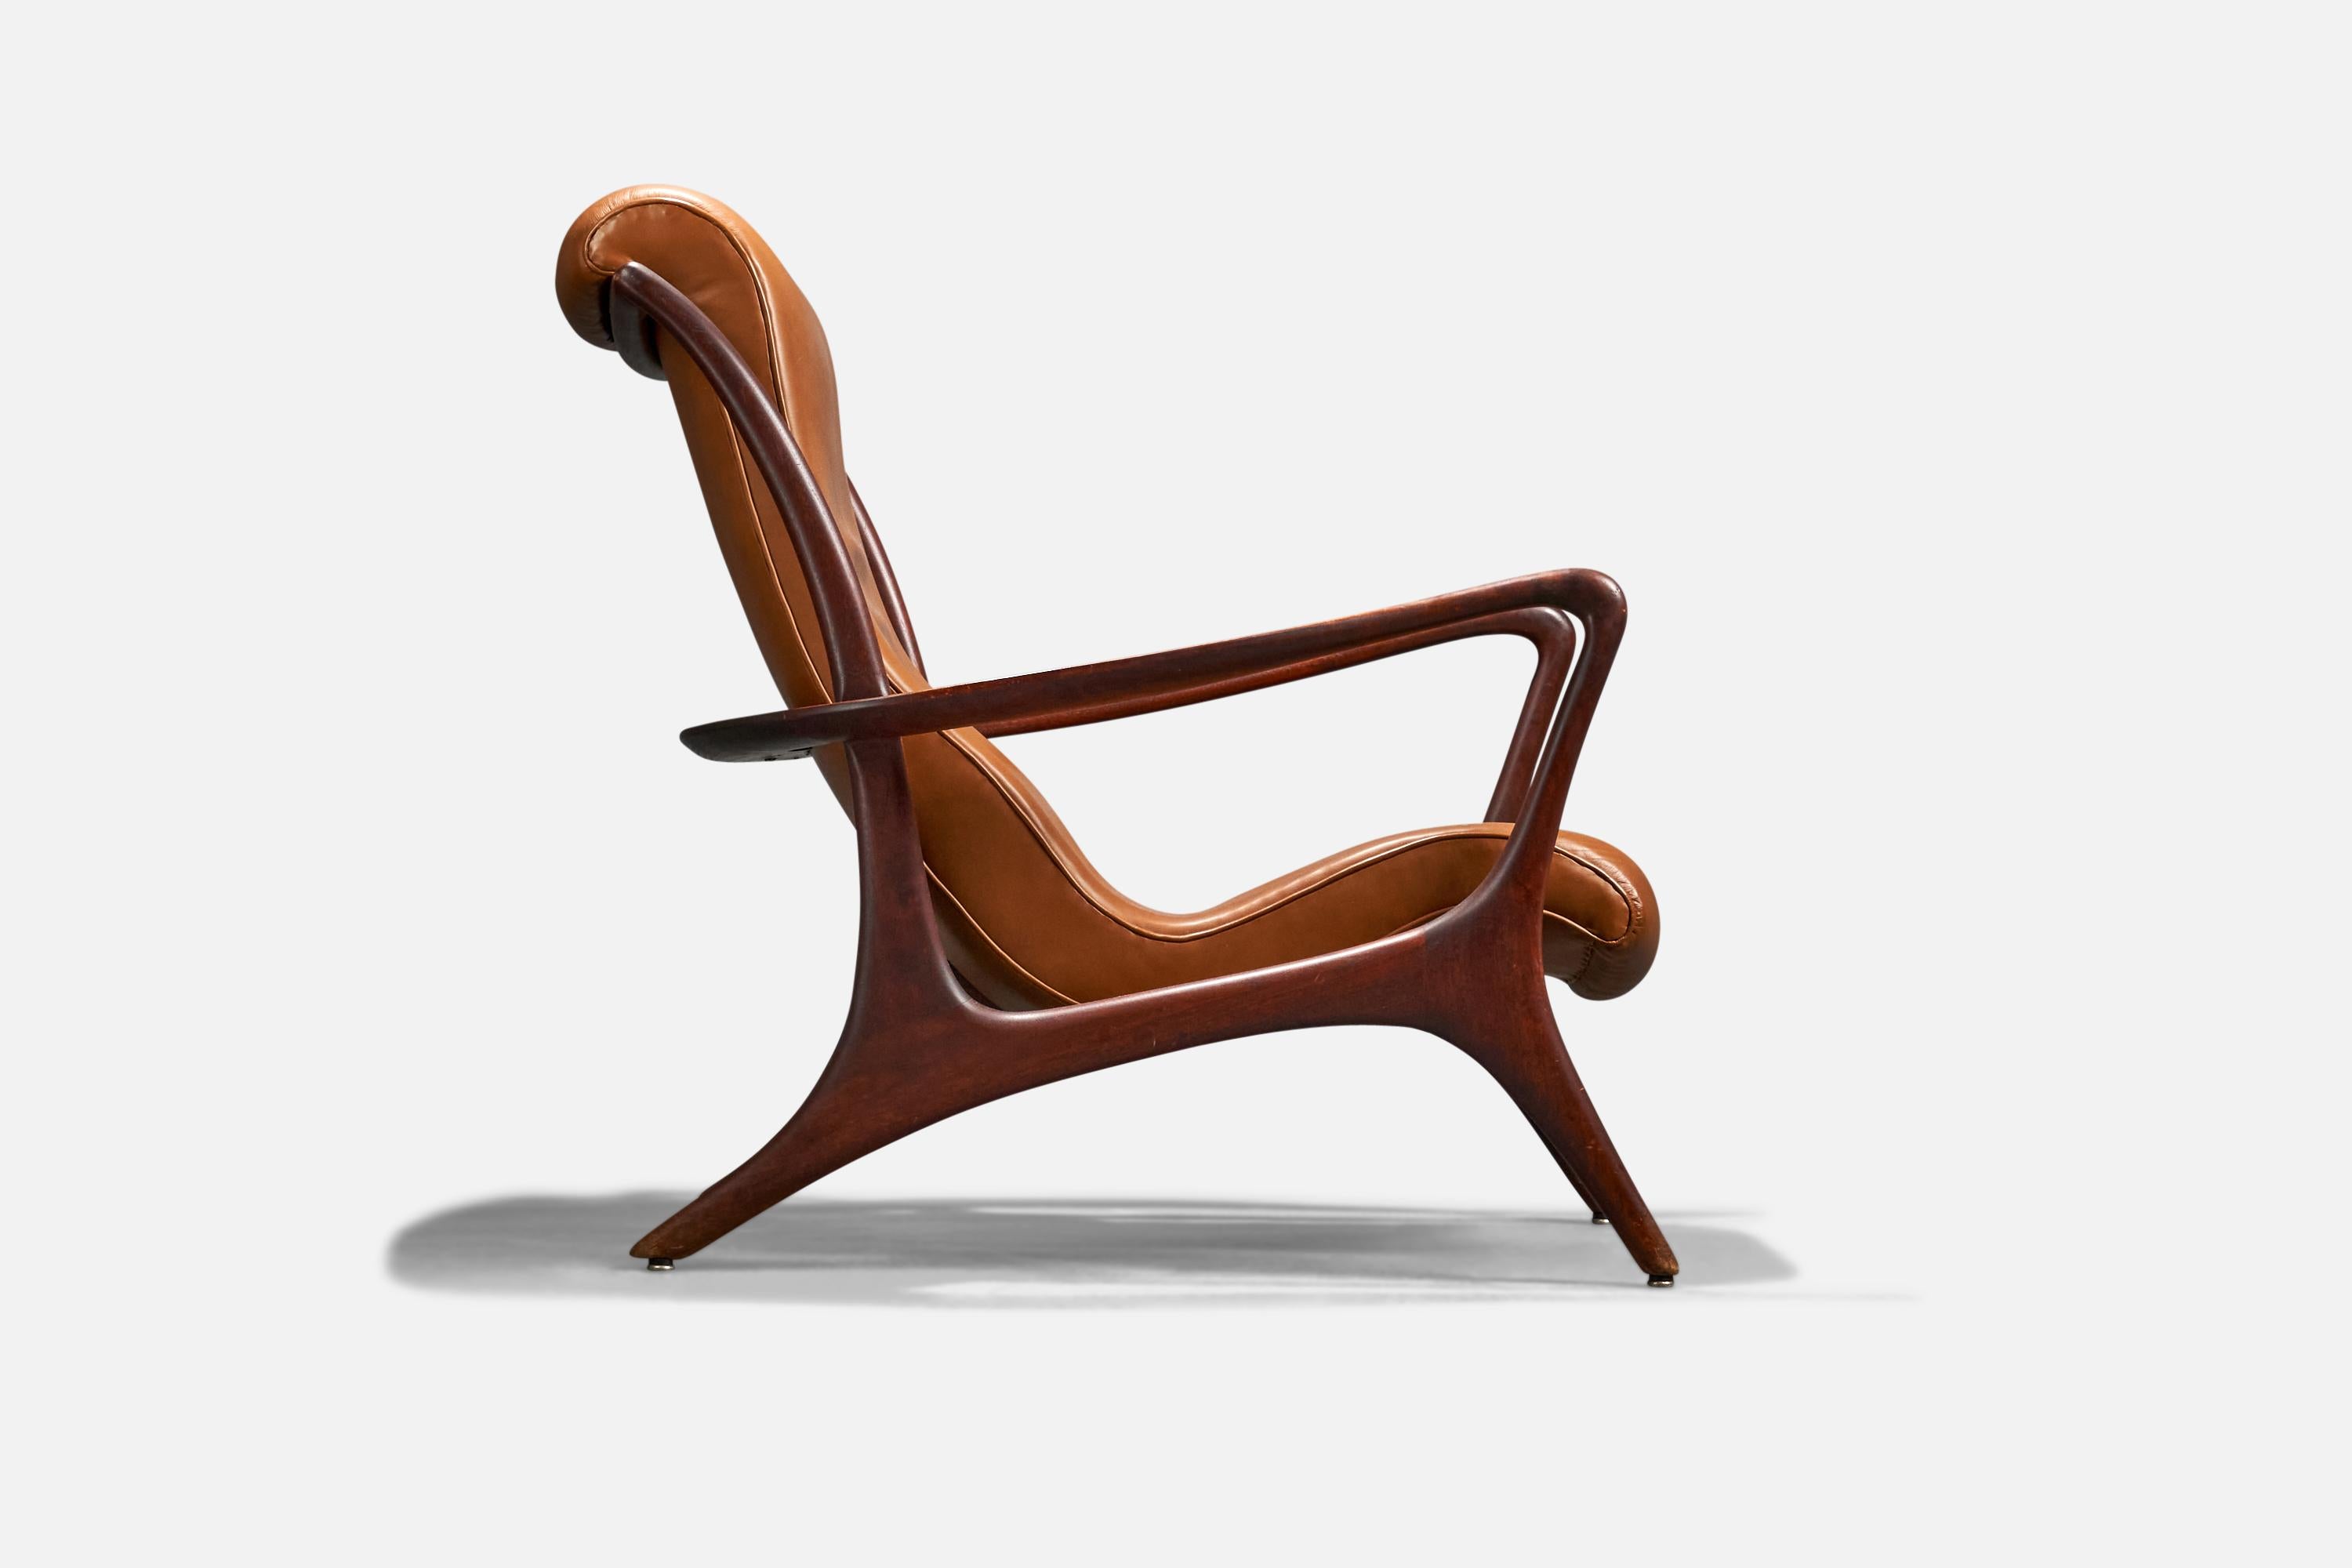 1950's contour lounge chair